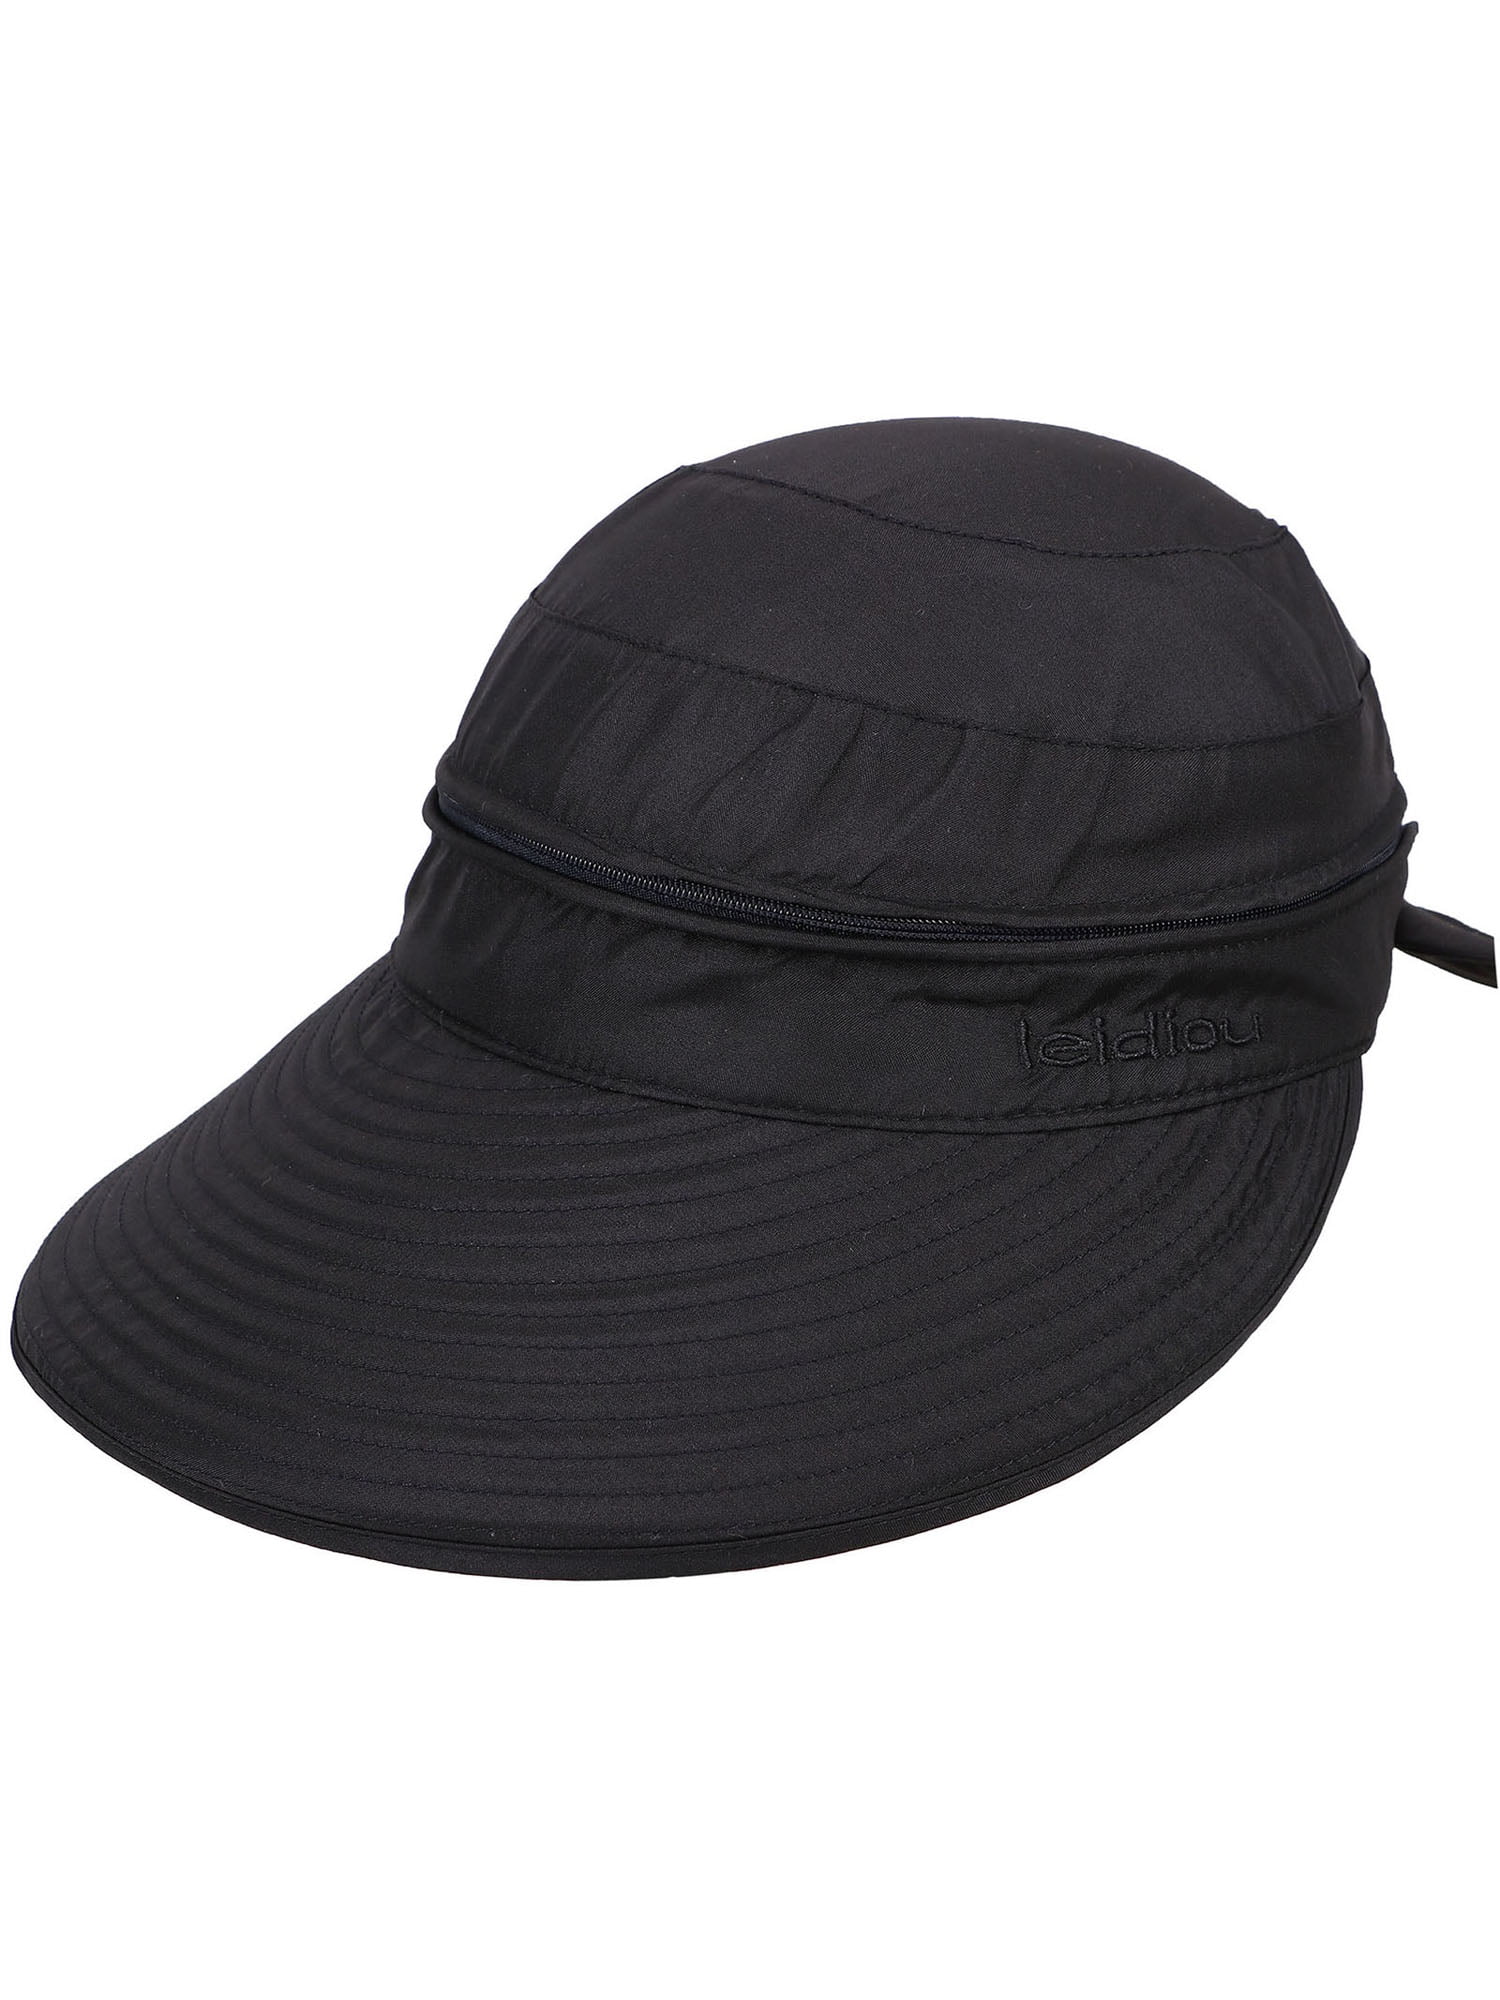 Half Lightweight Sun Visors GADIEMKENSD Womens Visor Hat with Big Brim UPF 50 